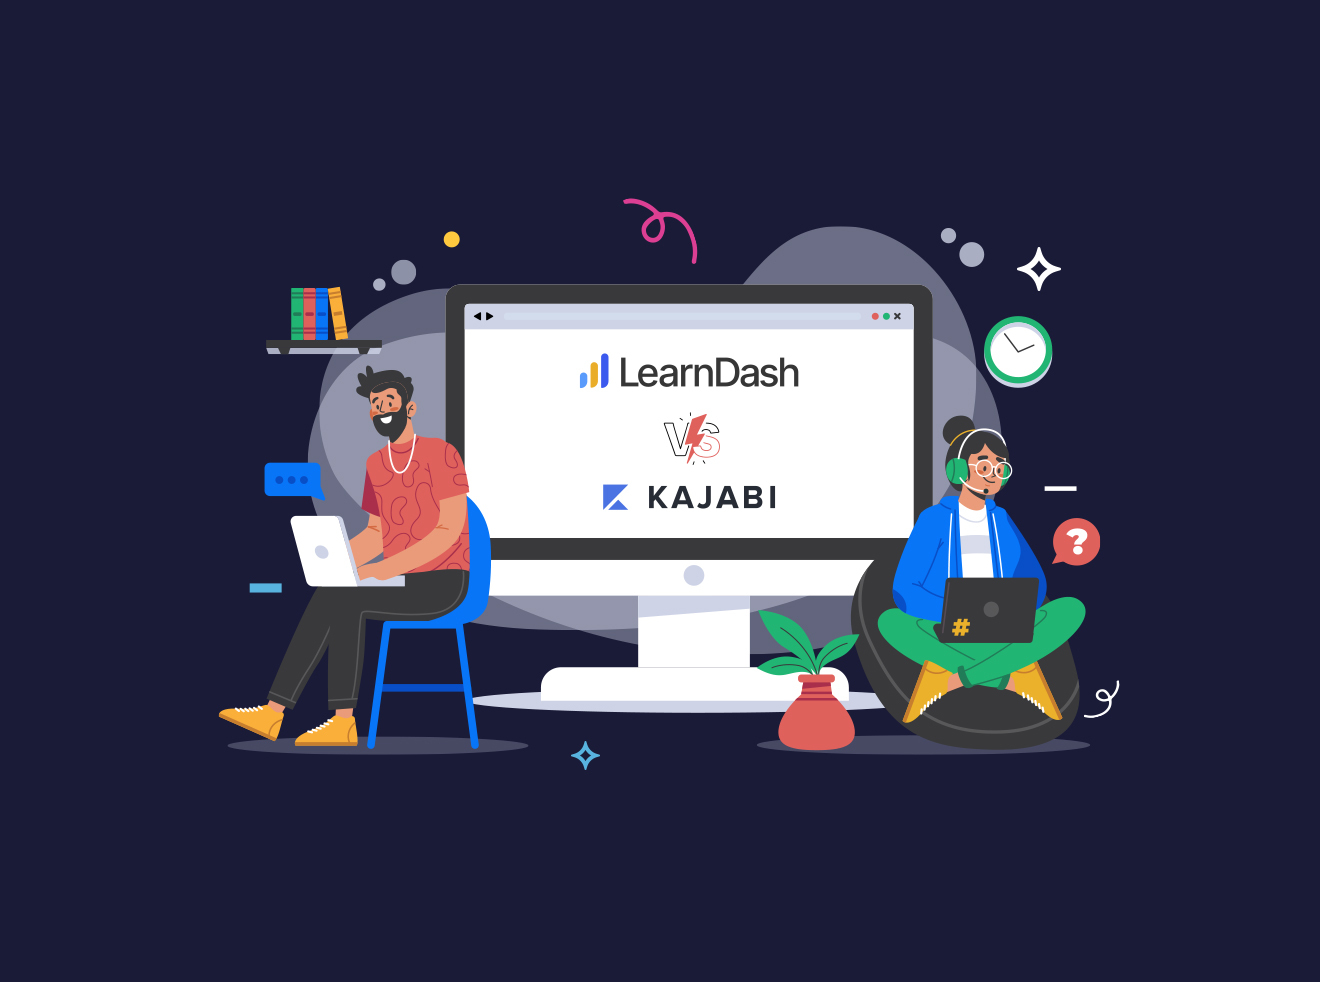 learndash vs kajabi